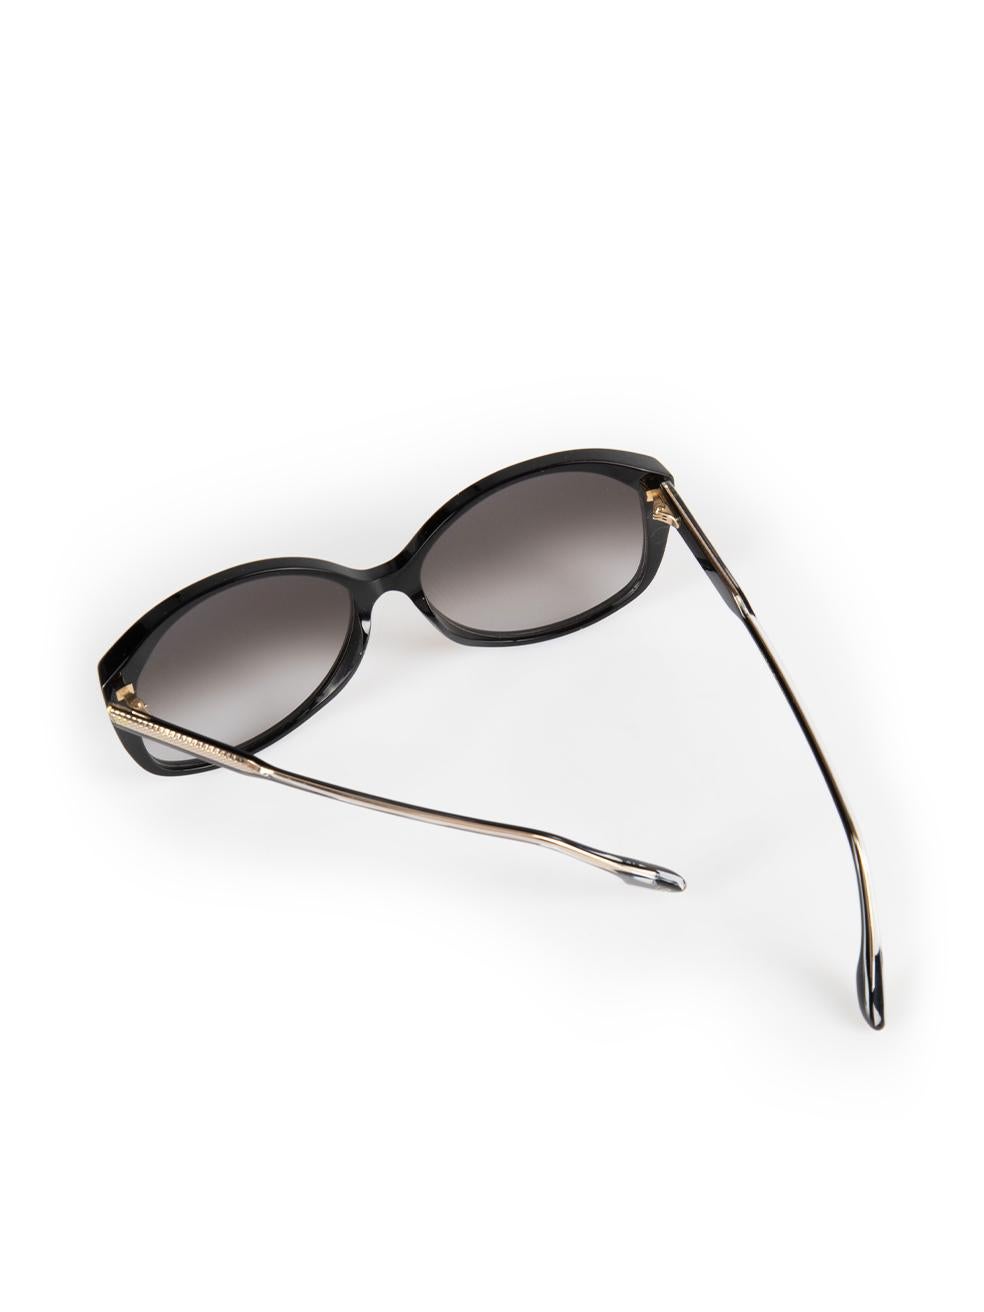 Victoria Beckham Black Round Gradient Sunglasses For Sale 4